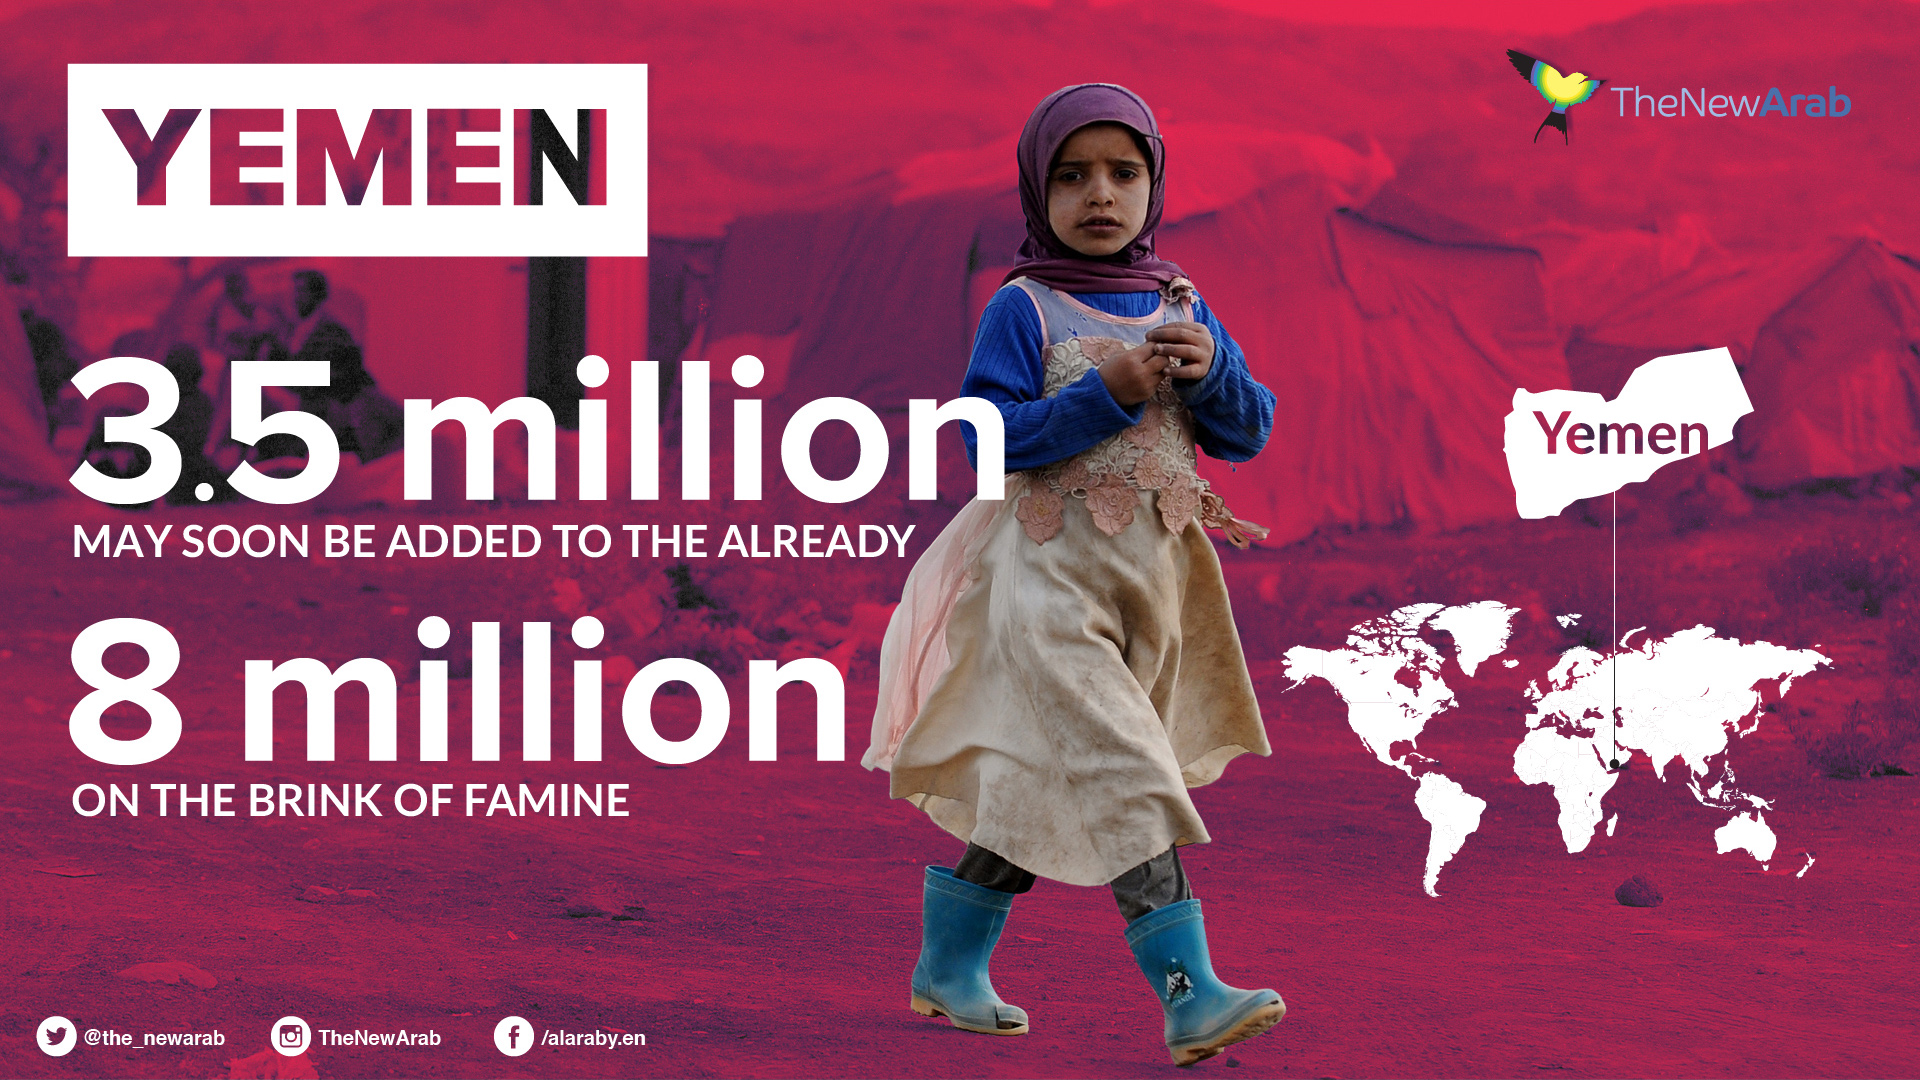 yemen famine_- 1920x1080.jpg